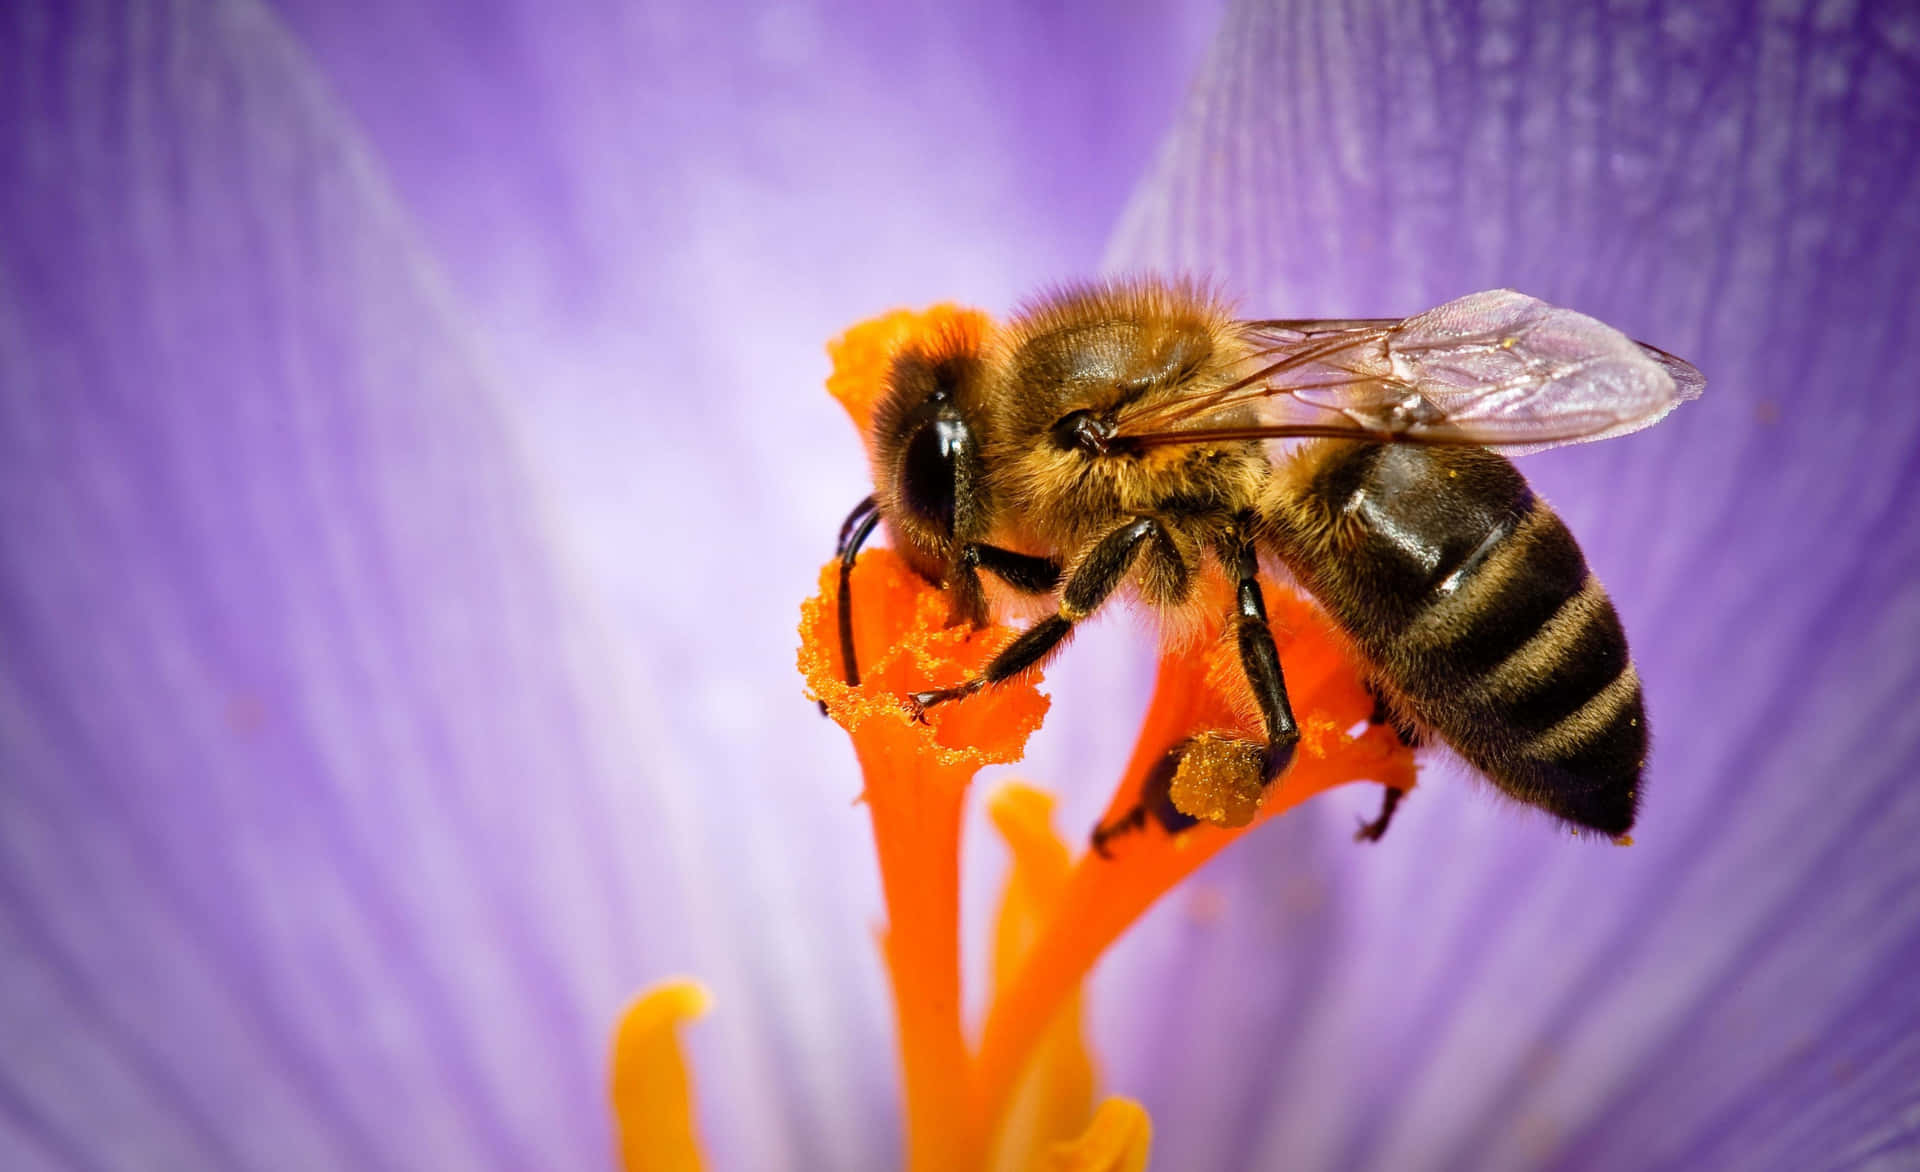 “The Sweetness of Life: A Honey Bee Enjoying the Lovely Sunshine”